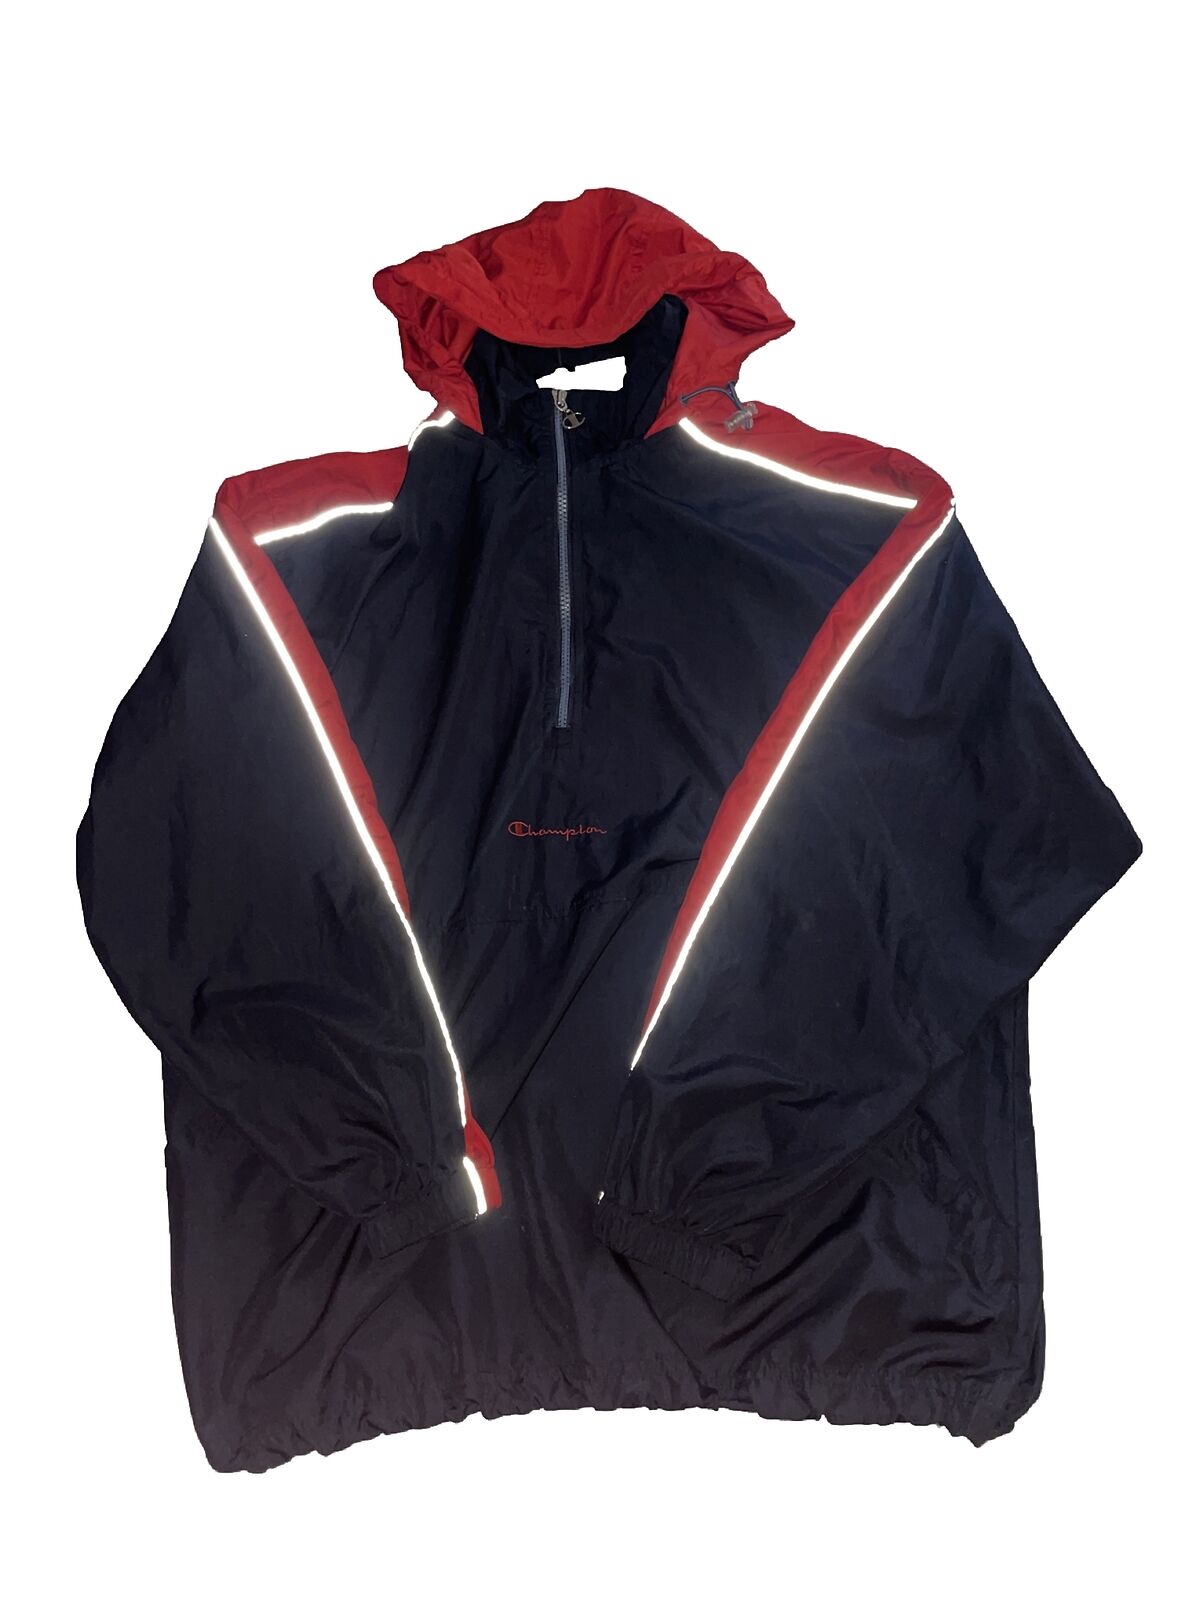 1990s vintage champion jacket xl - image 1